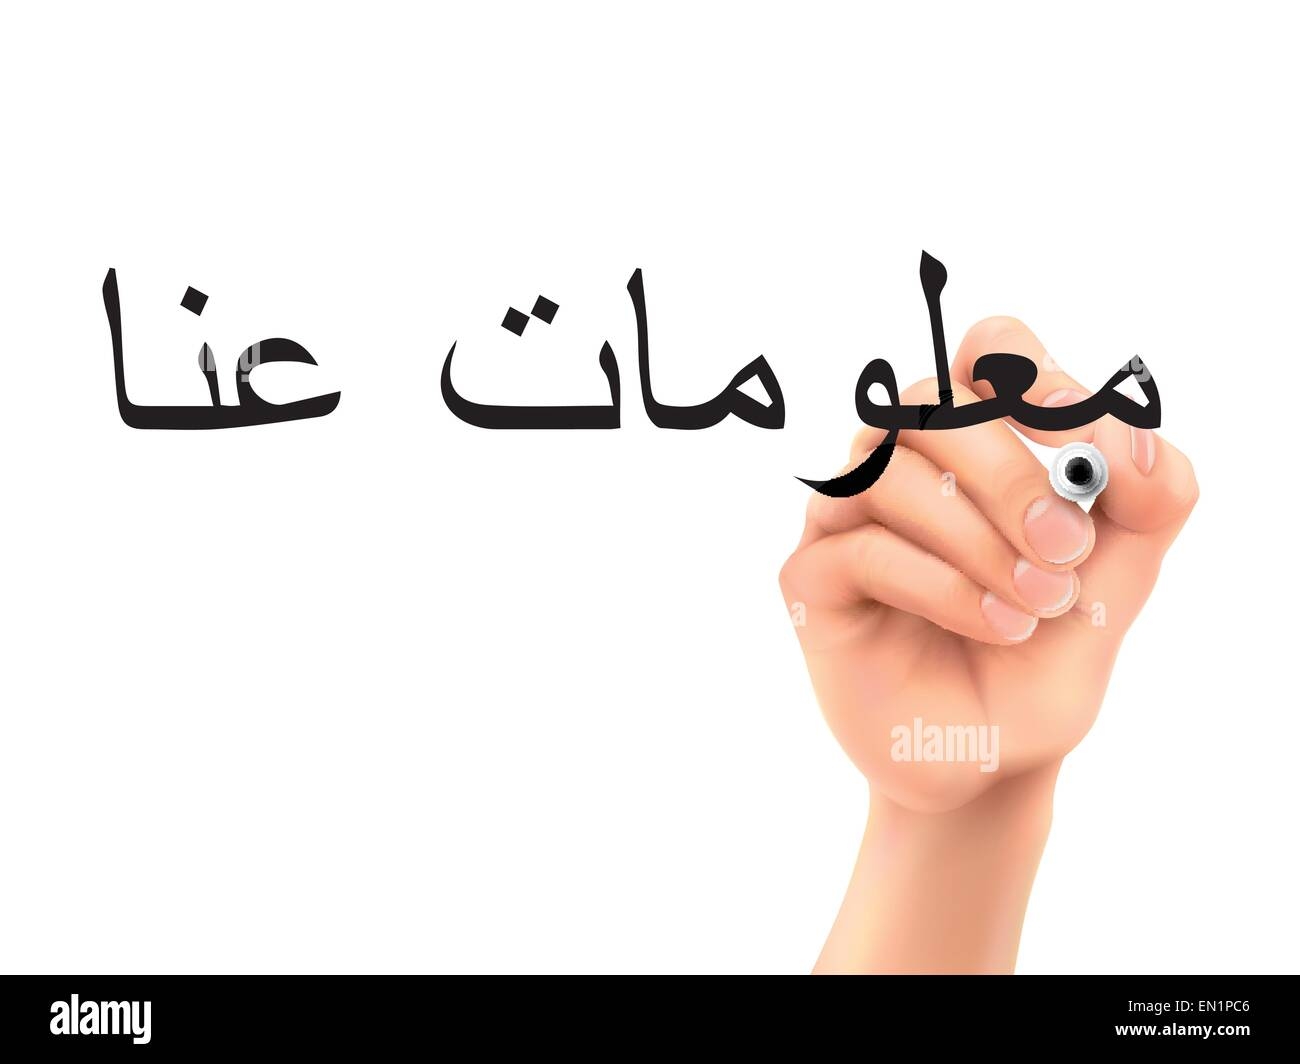 63 словами. Друг на арабском. Ильдар на арабском. Красивые слова на арабском. Друг по арабски.